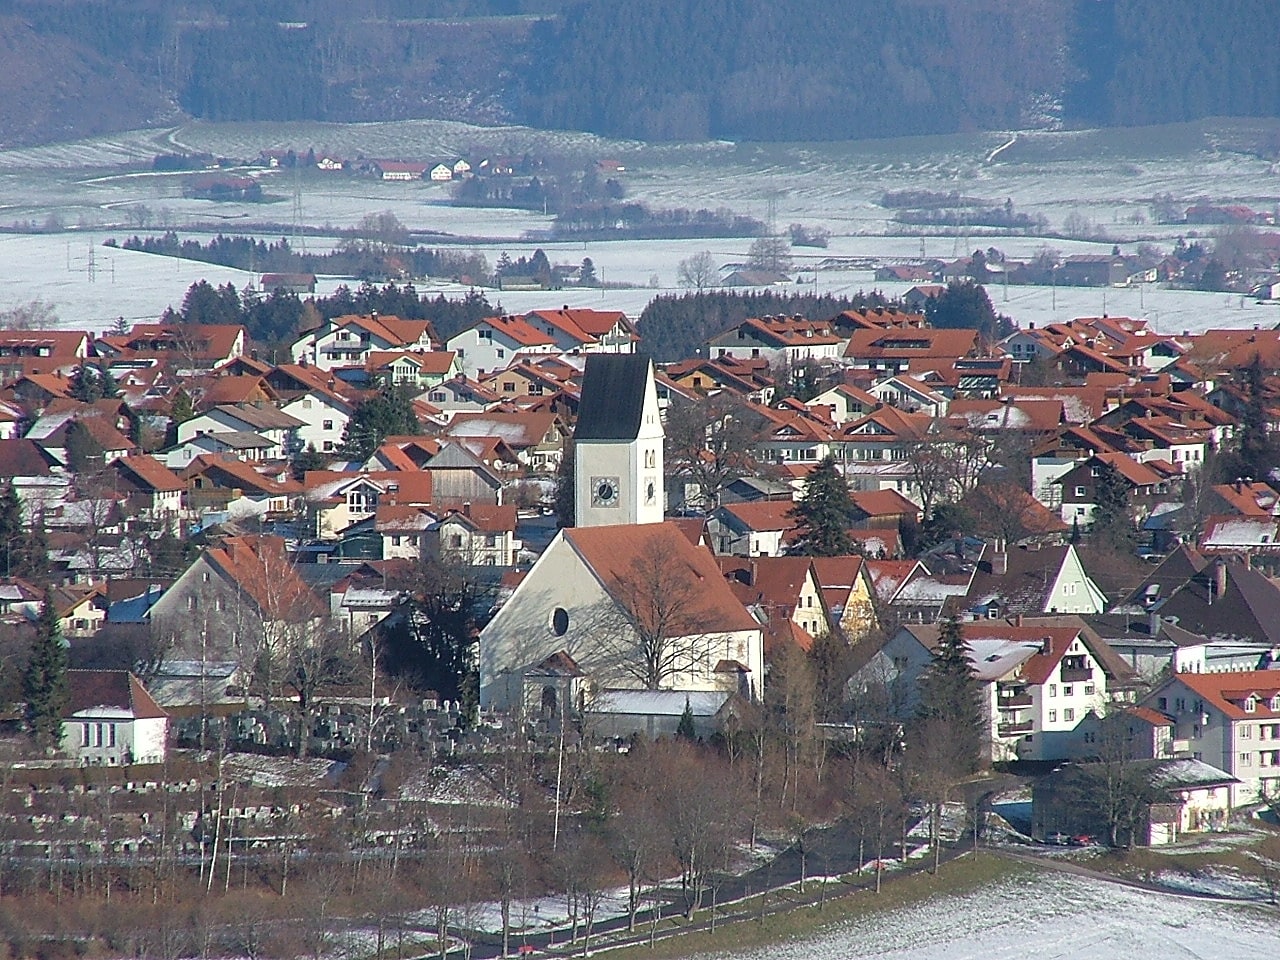 Altusried, Germany